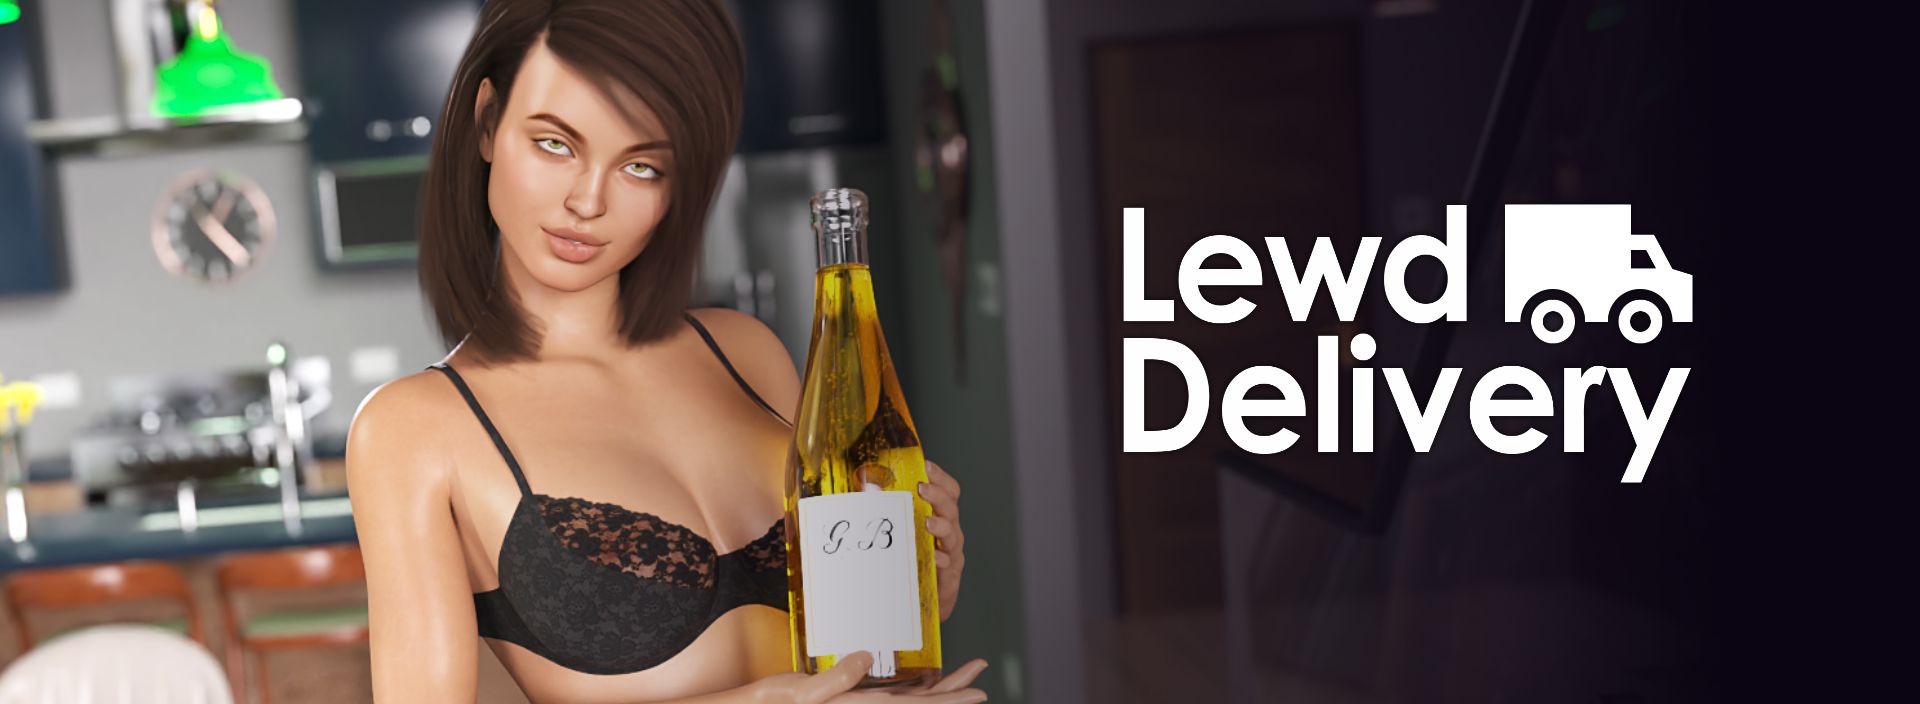 Lewd Delivery [Eromantis] Adult xxx Game Download